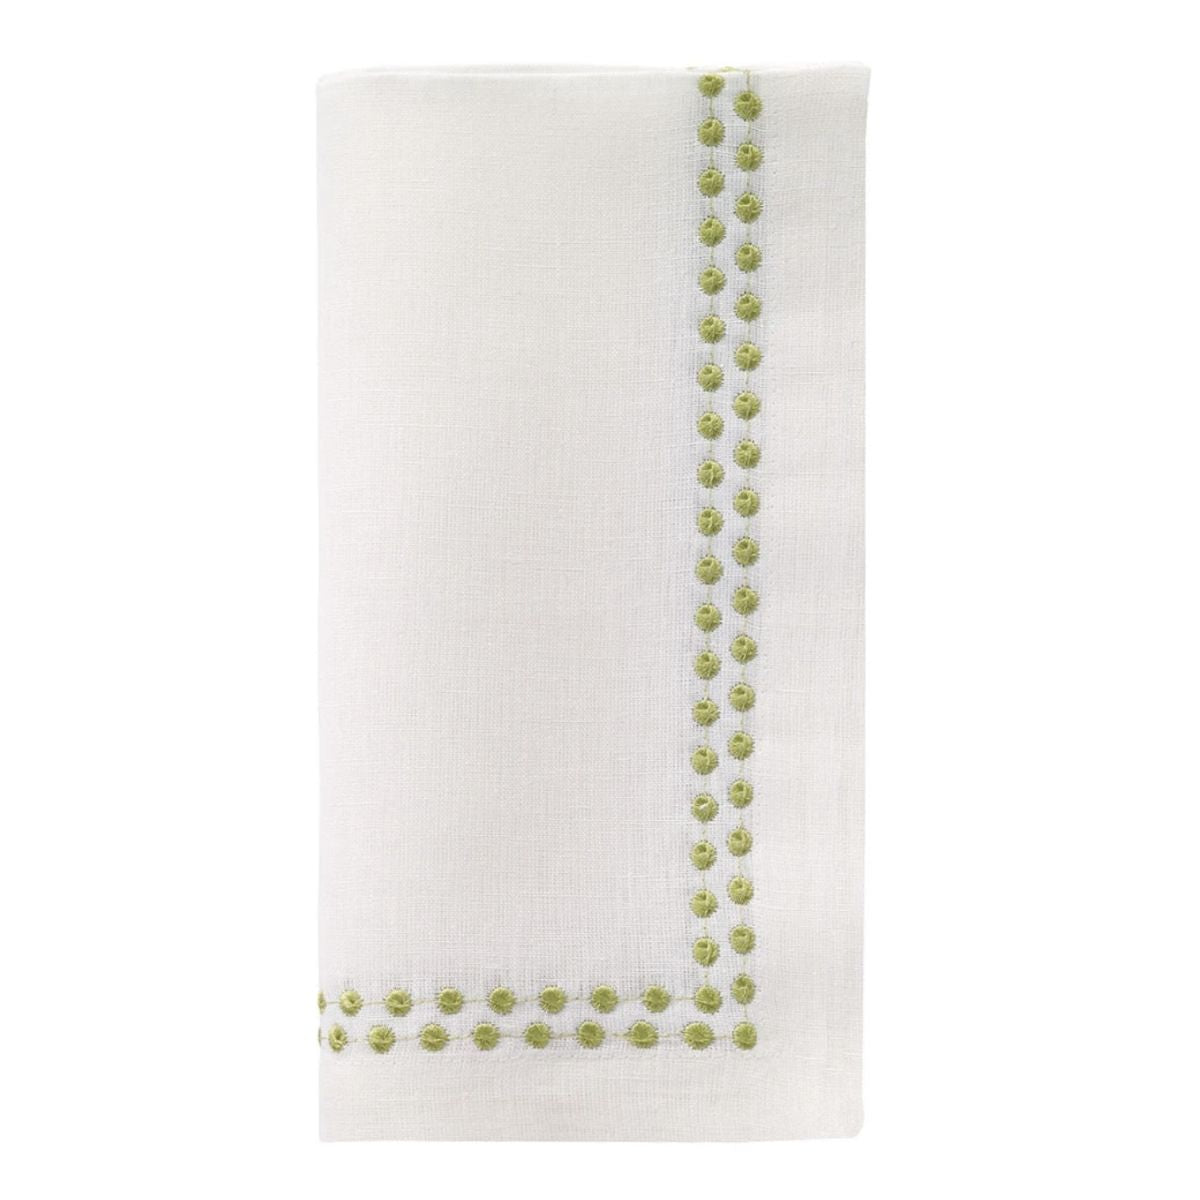 Pearls Linen Napkins, Set of 4-Bespoke Designs